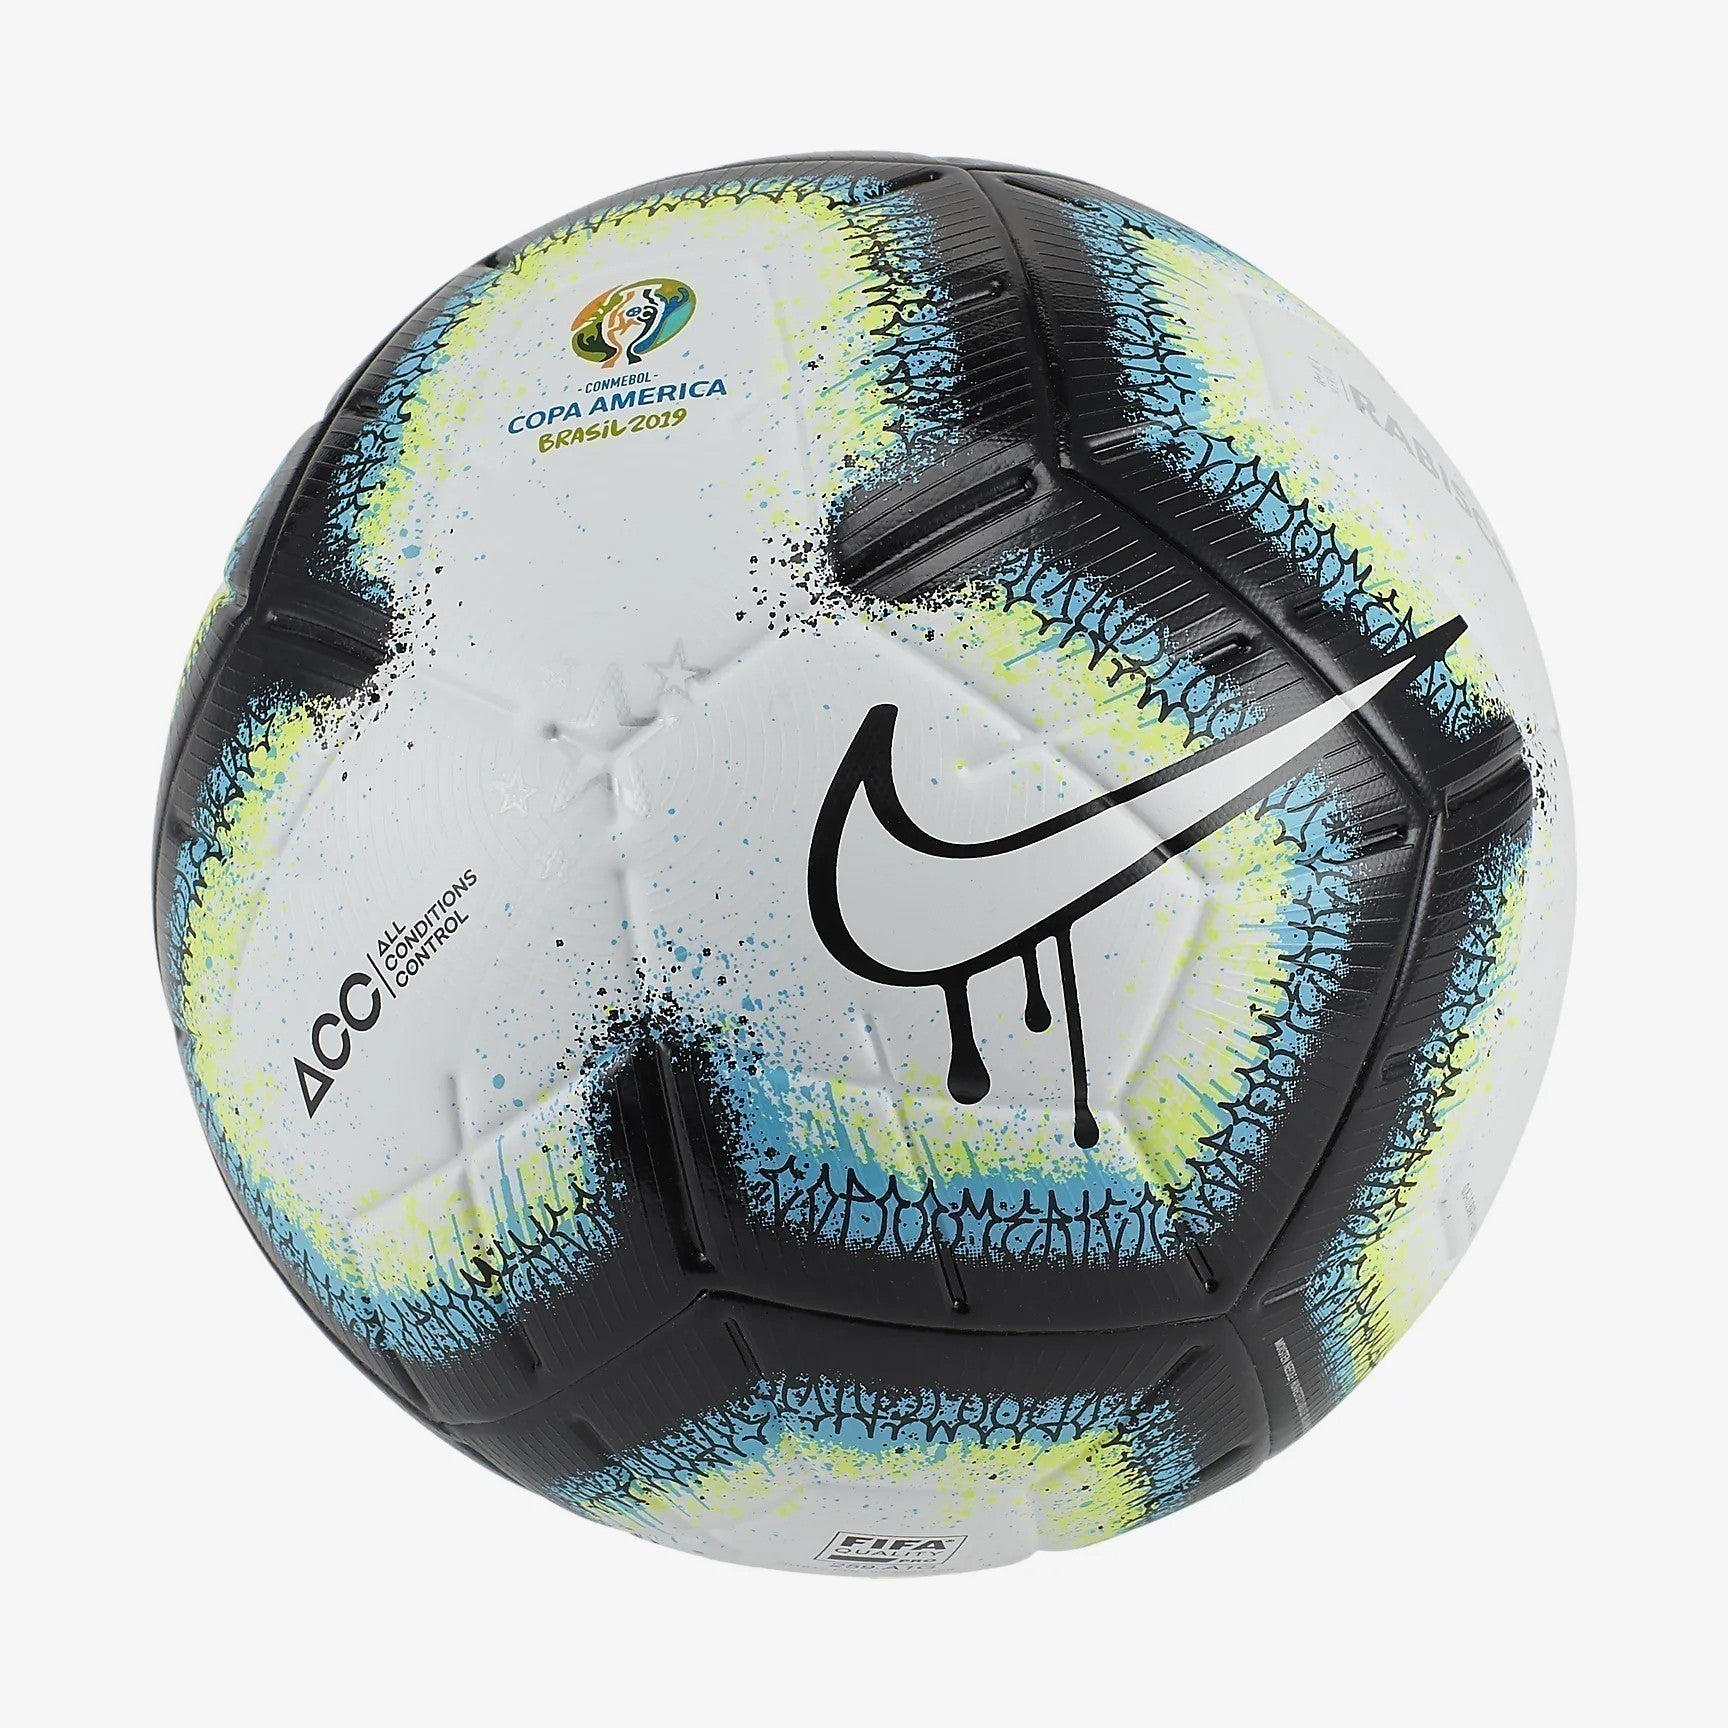 Merlin Rabisco Copa America 2019 Soccer Ball - White/Black/Blue/White -  Niky's Sports